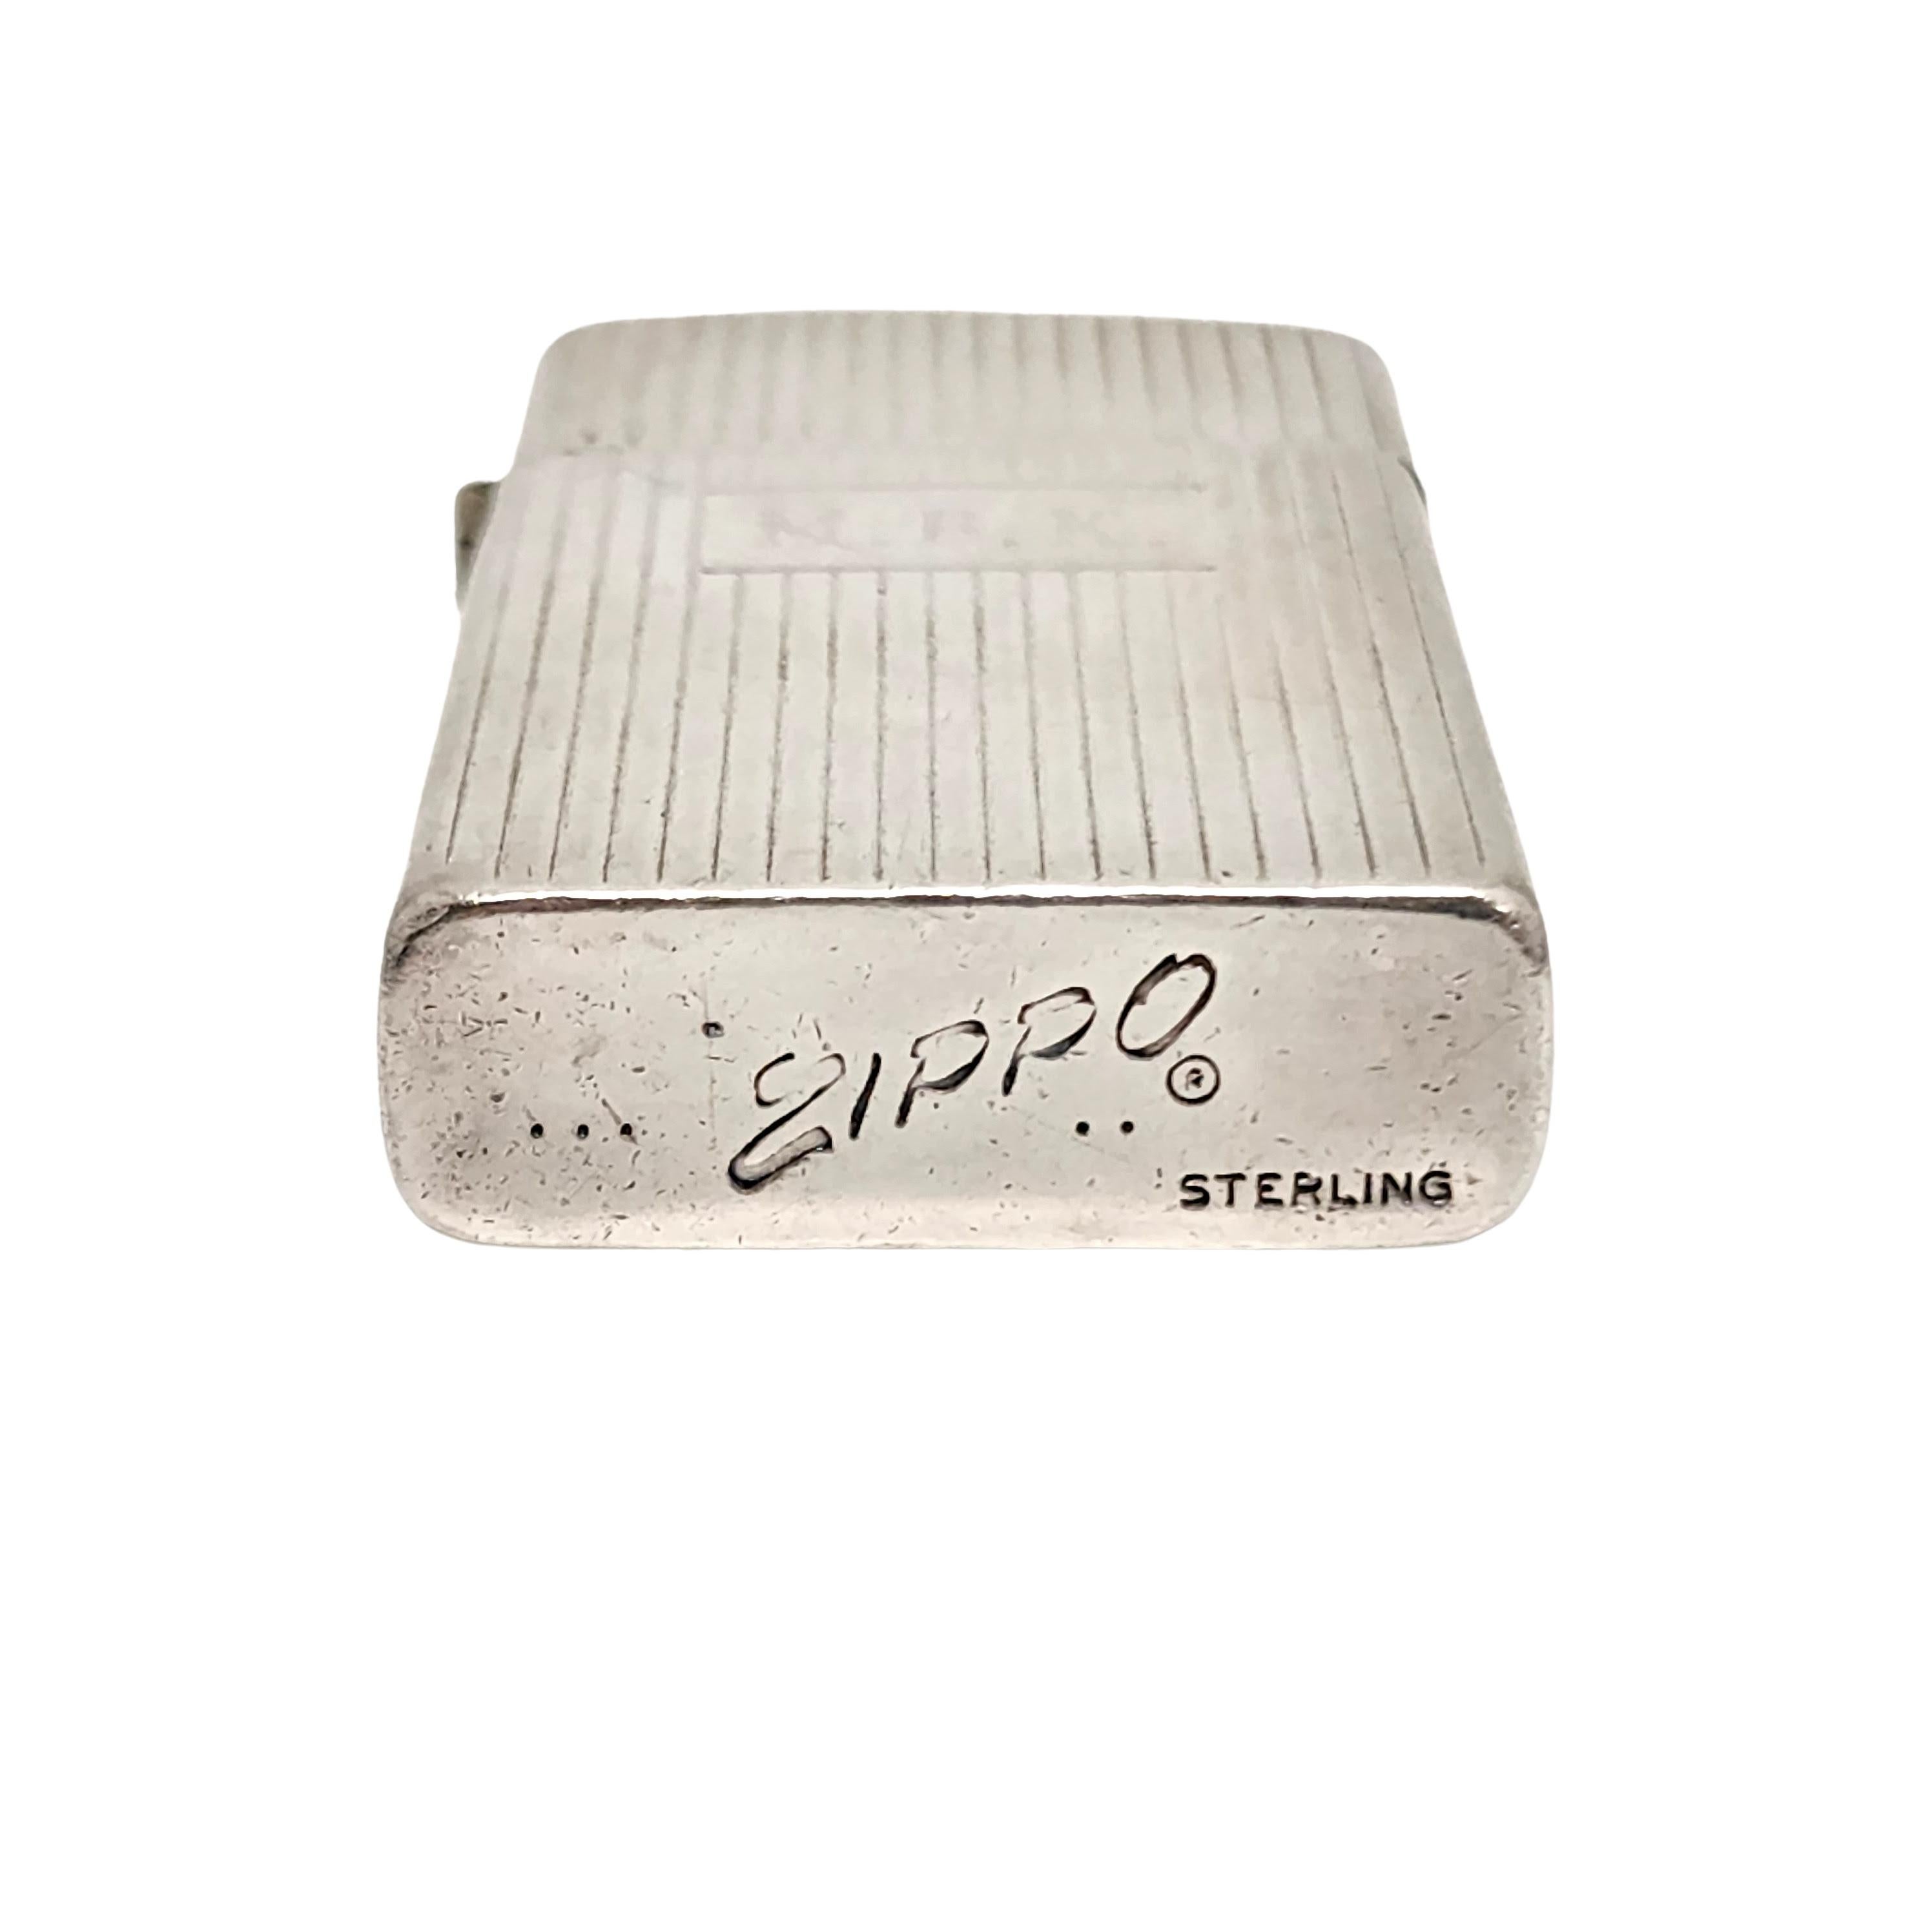 Zippo Sterling Silver Engine Turned Slim Lighter Case Holder w/ Monogram #13040 For Sale 2